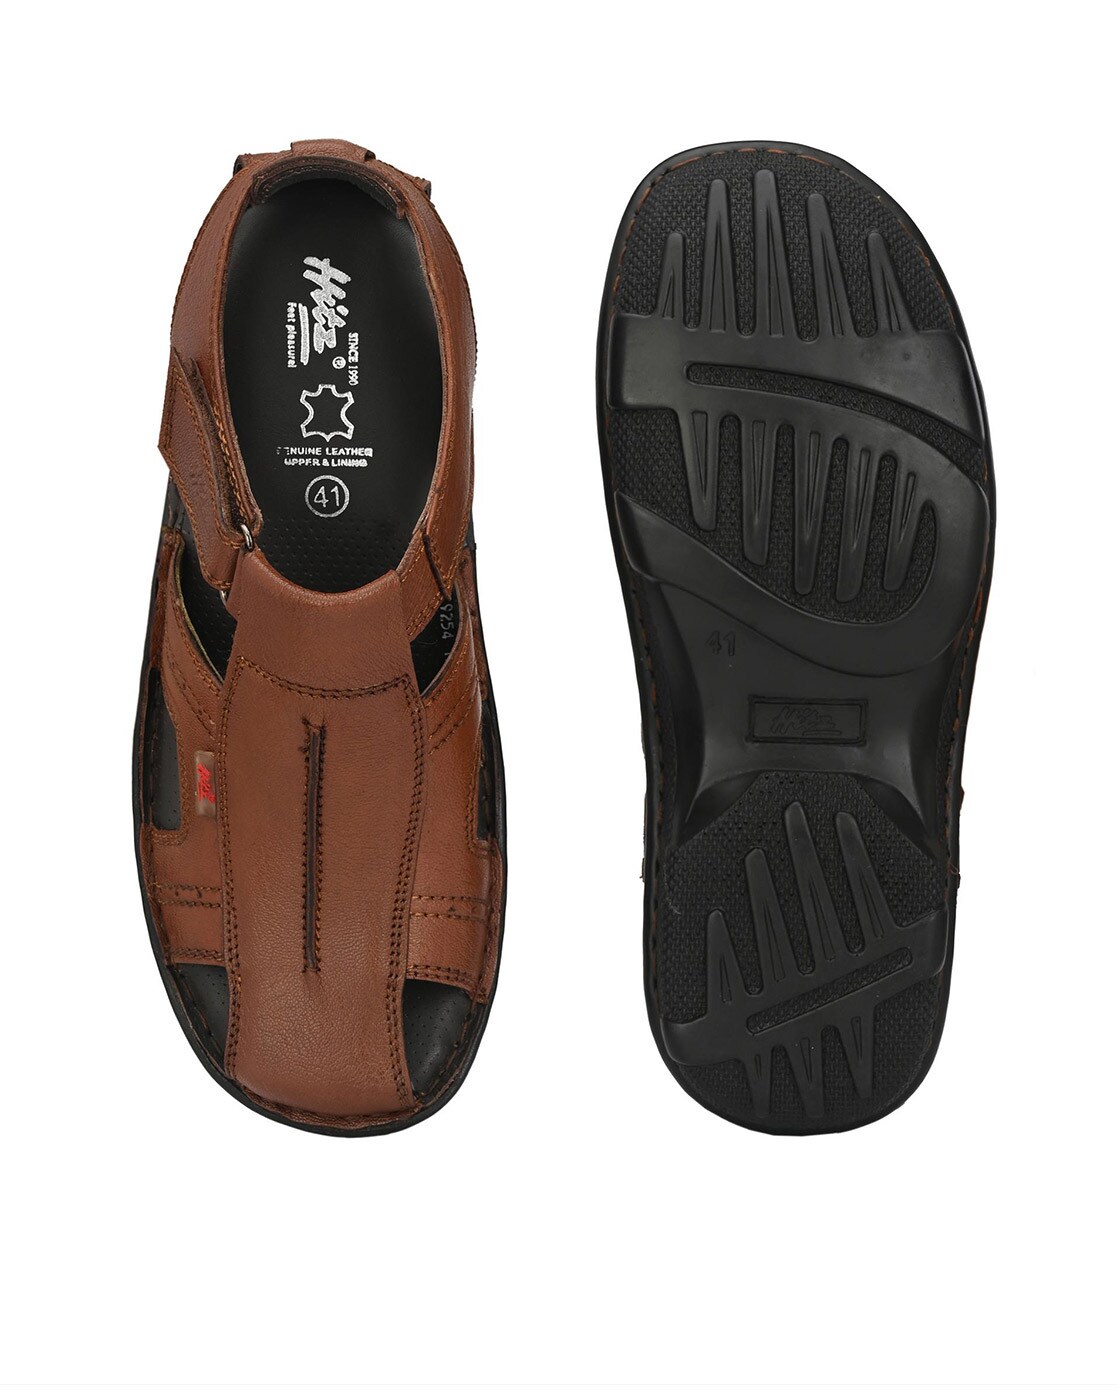 Greek Sandals Men, Slingback Sandals, Mens Leather Sandals, Summer Sandals,  Gift for Him, Made From Genuine Leather in Greece. - Etsy